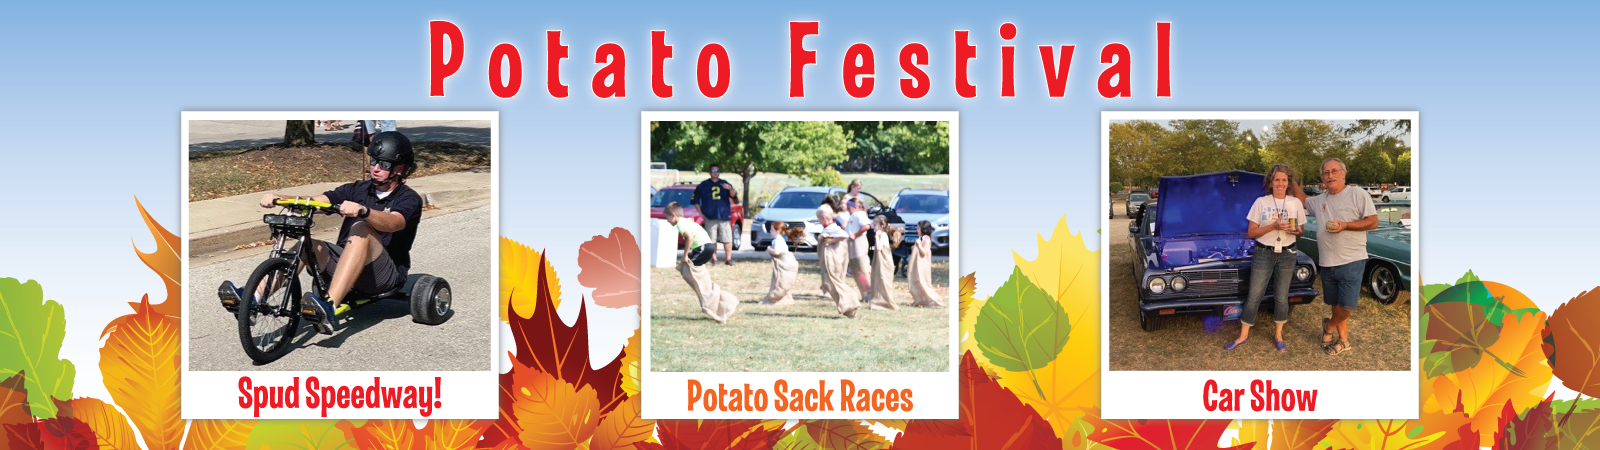 Potato Festival